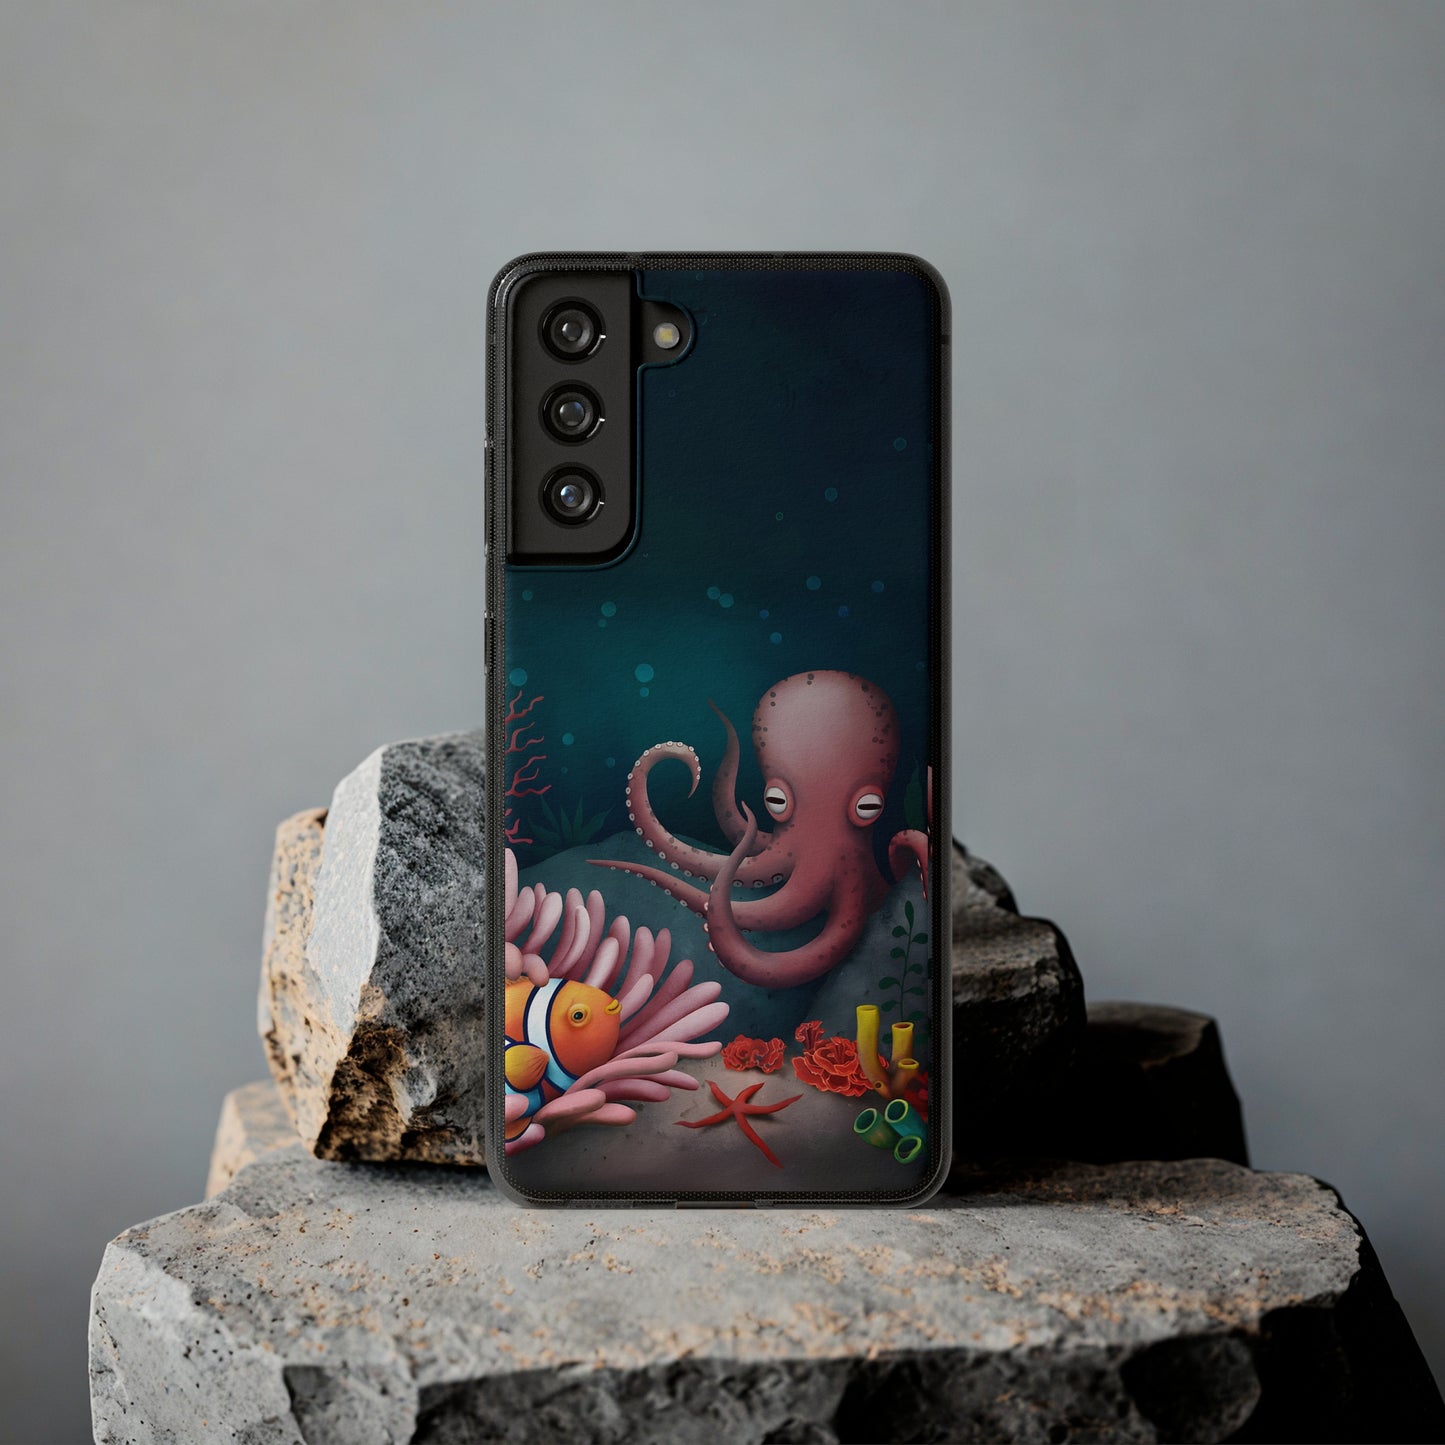 The mischievous octopus Clementine